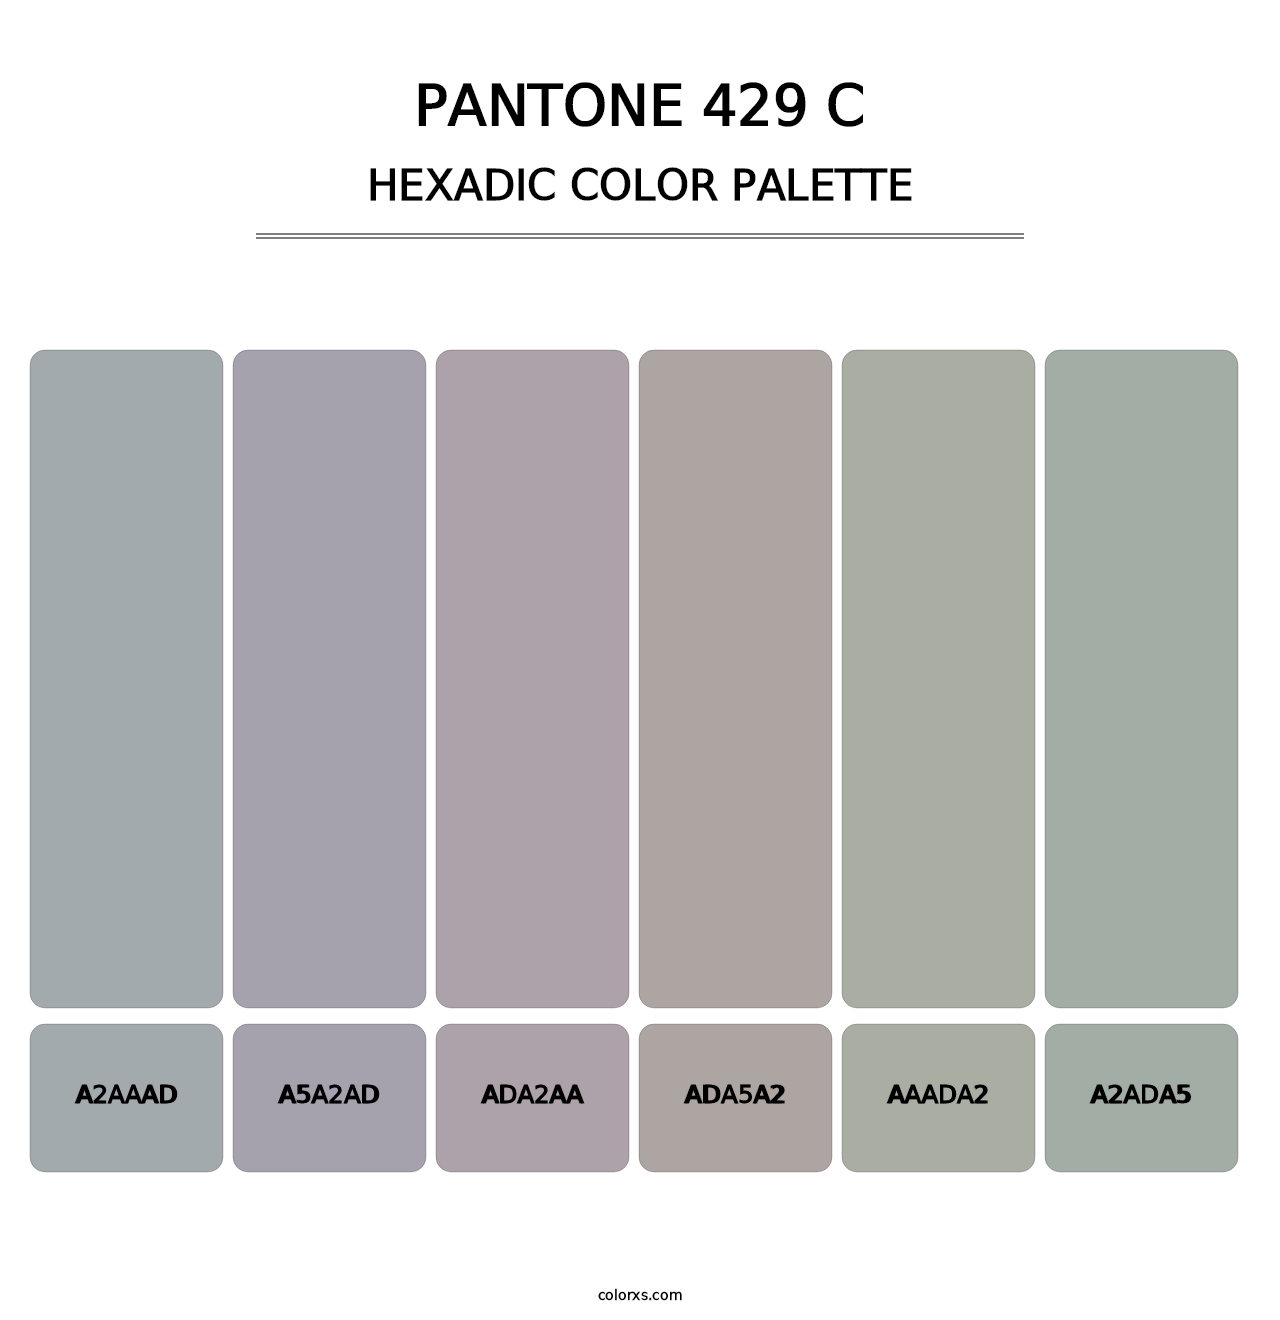 PANTONE 429 C - Hexadic Color Palette